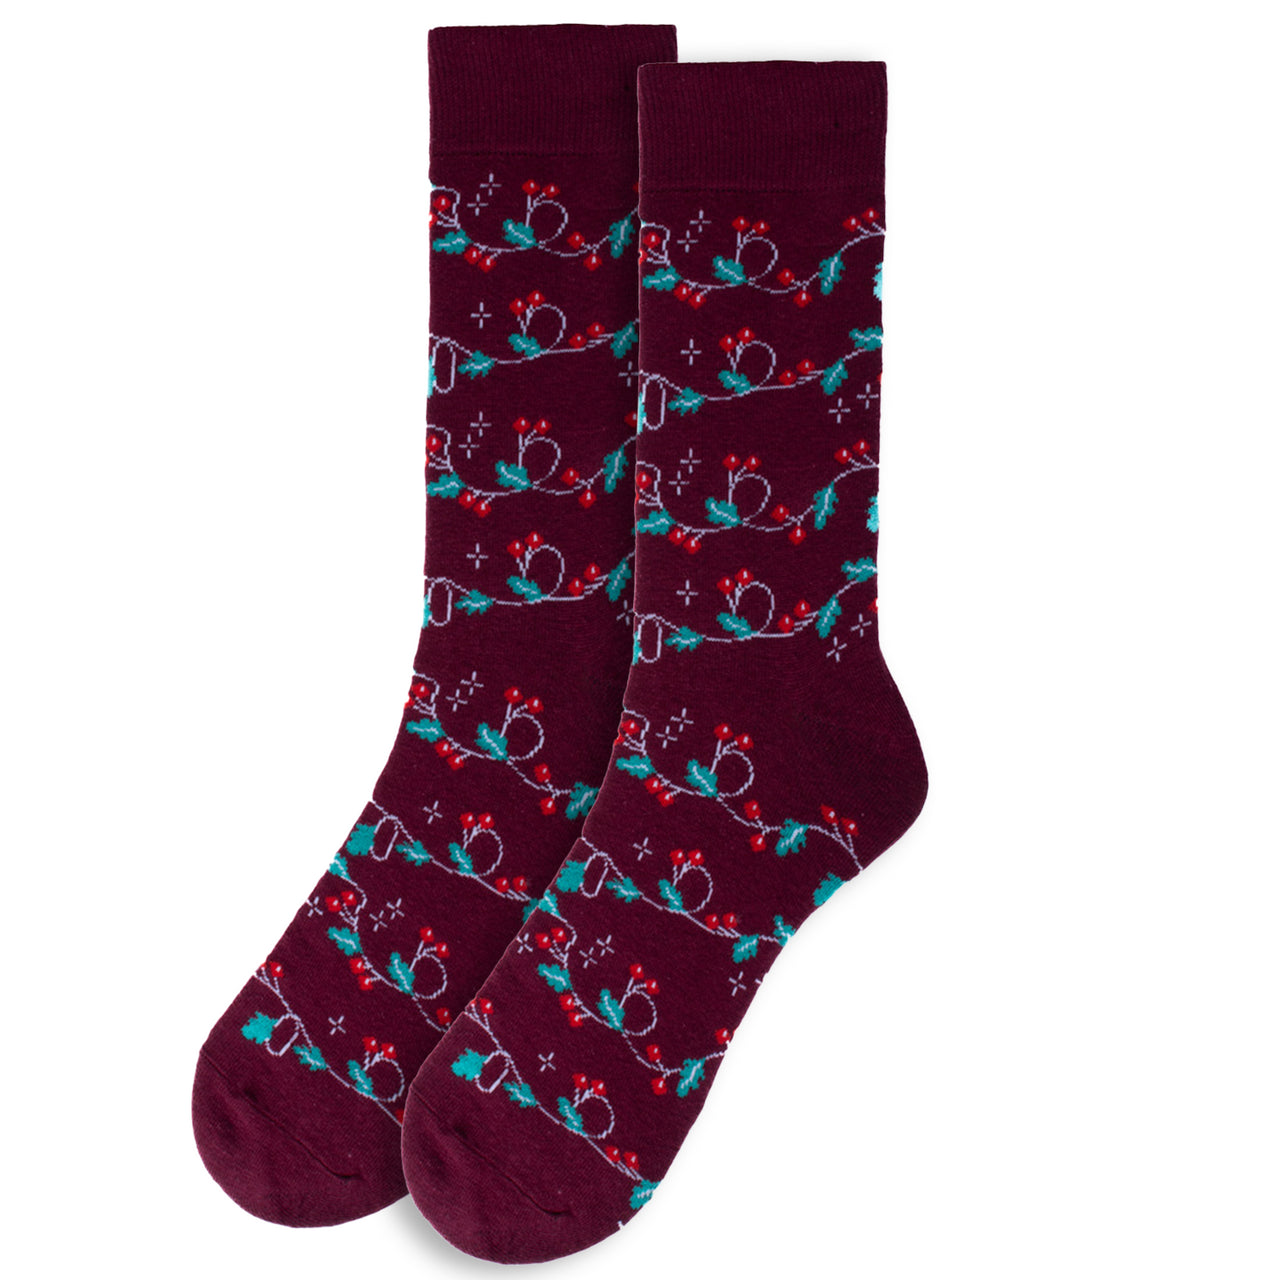 Under the Mistletoe Socks Fun Socks Men's Festivity Novelty Socks Red and Fun Colors Christmas Theme Socks Gifts Holiday Season Socks